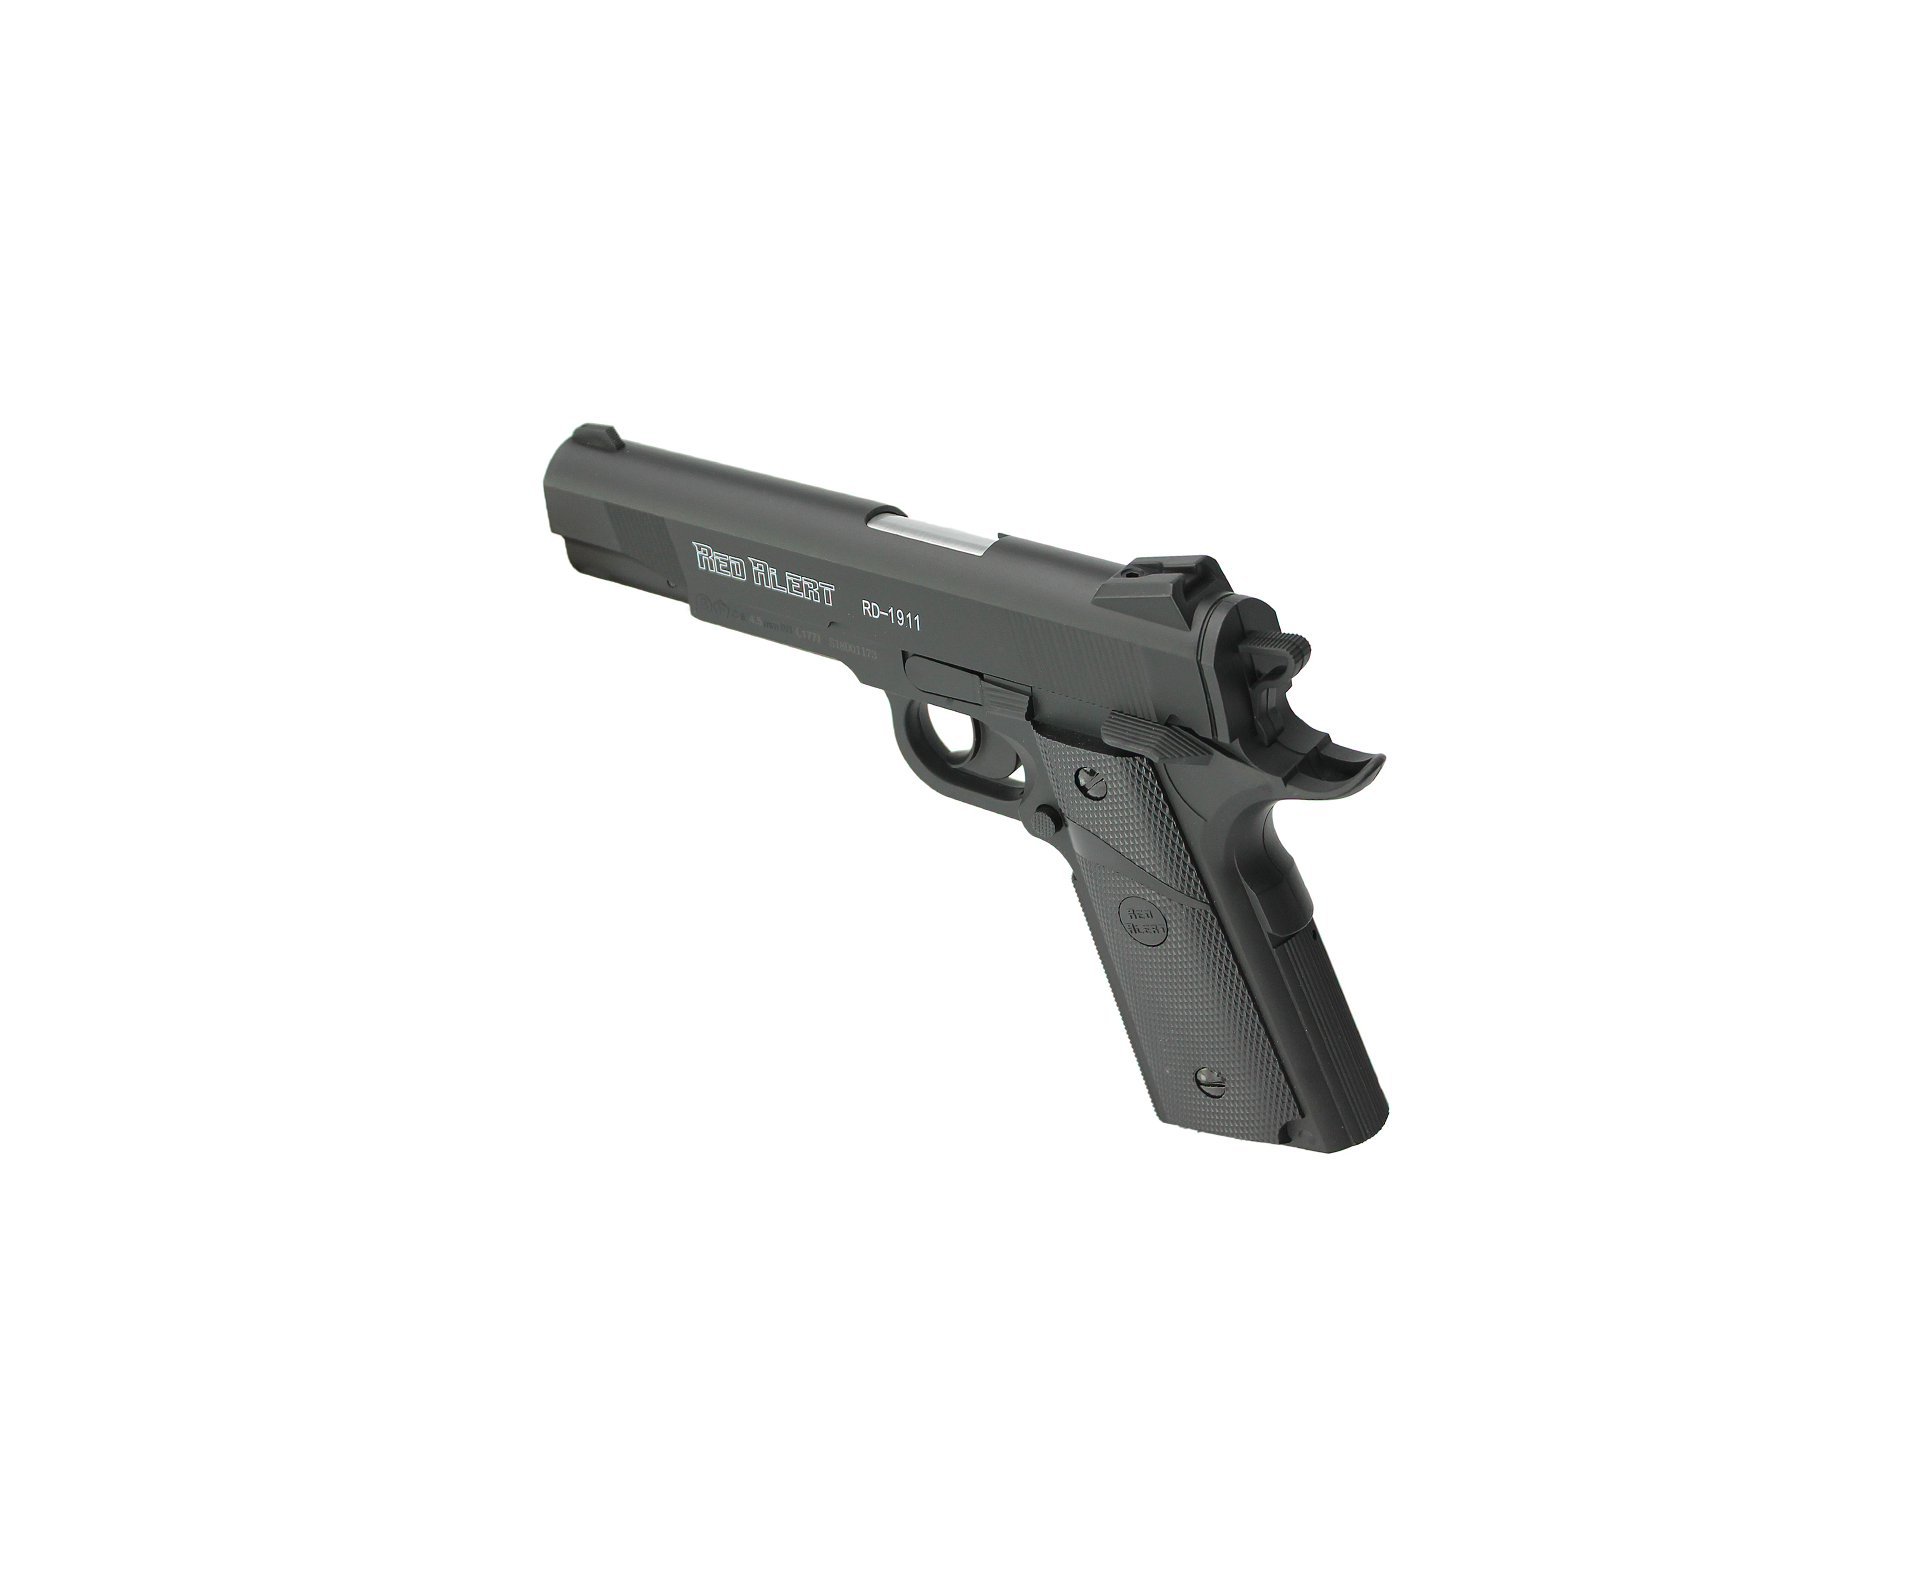 Pistola Pressão Co2 Gamo Red Alert Rd-1911 4,5mm